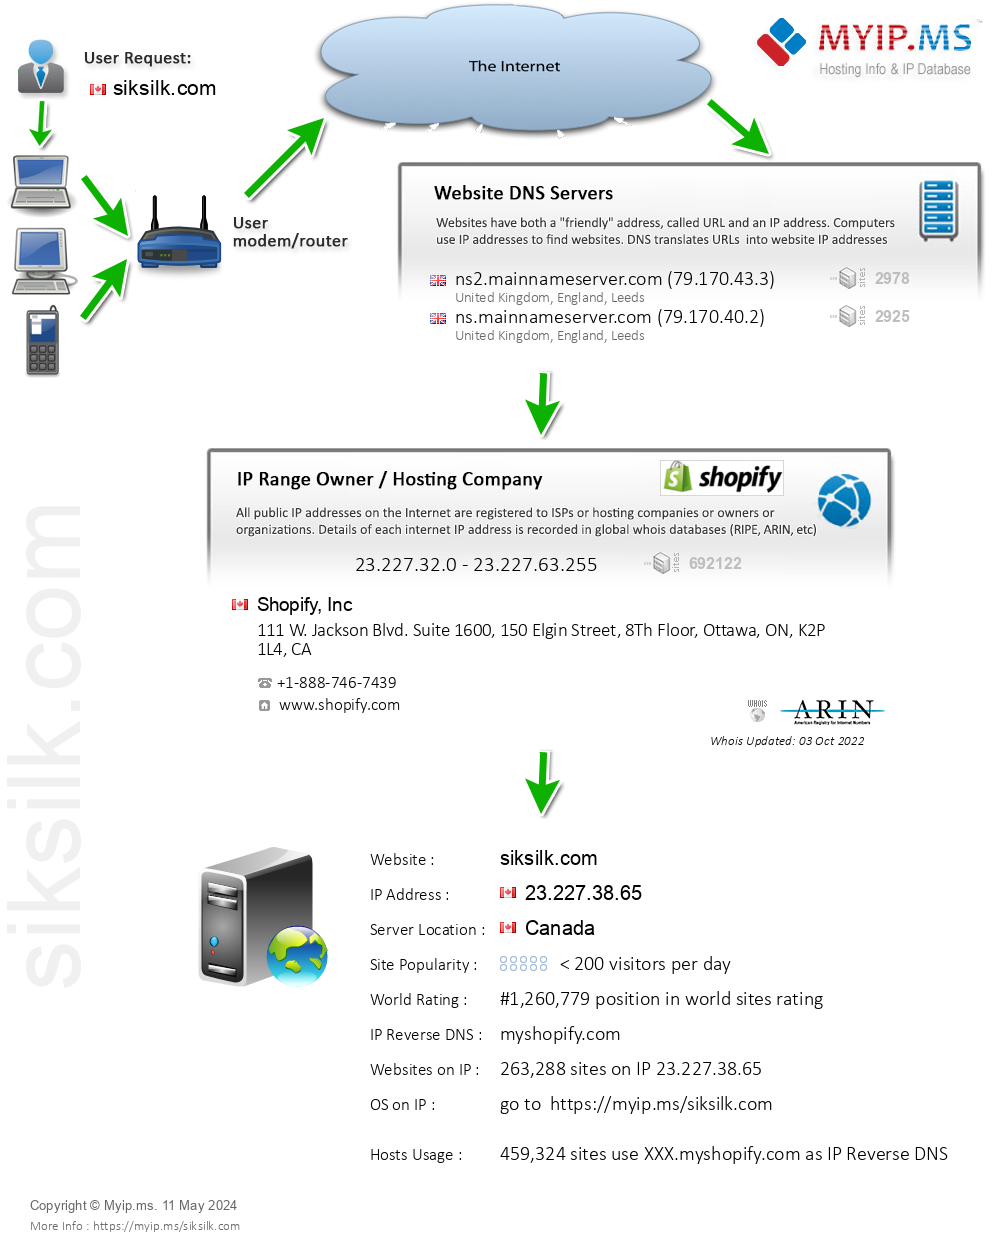 Siksilk.com - Website Hosting Visual IP Diagram